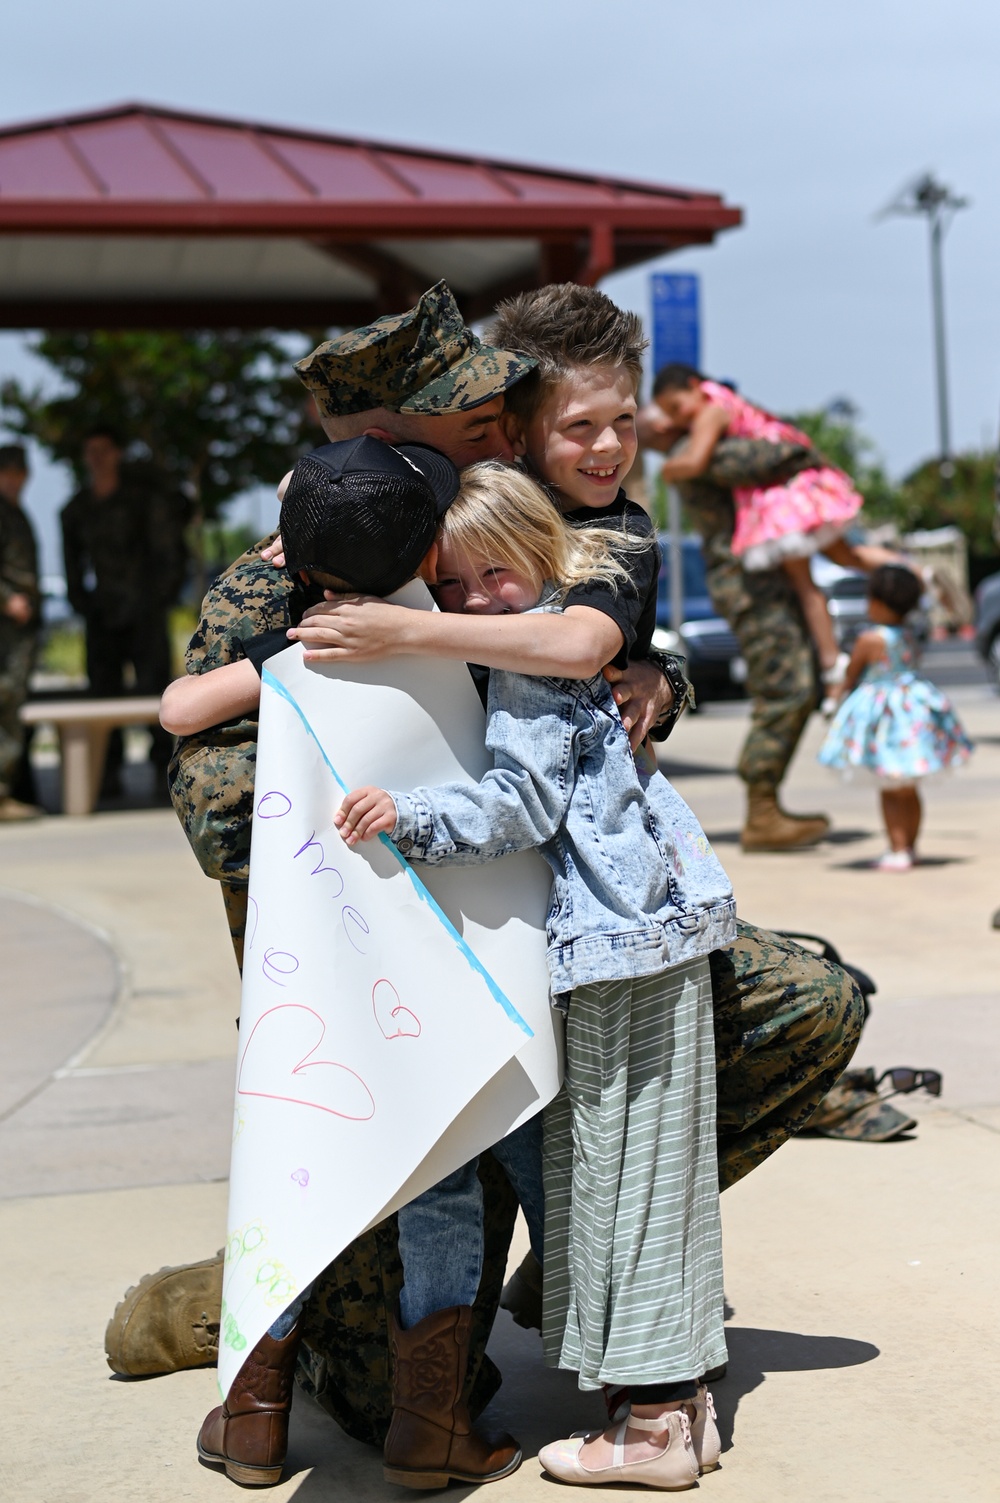 15th MEU All-Domain Reconnaissance Detachment Marines, Sailors return from seven-month deployment